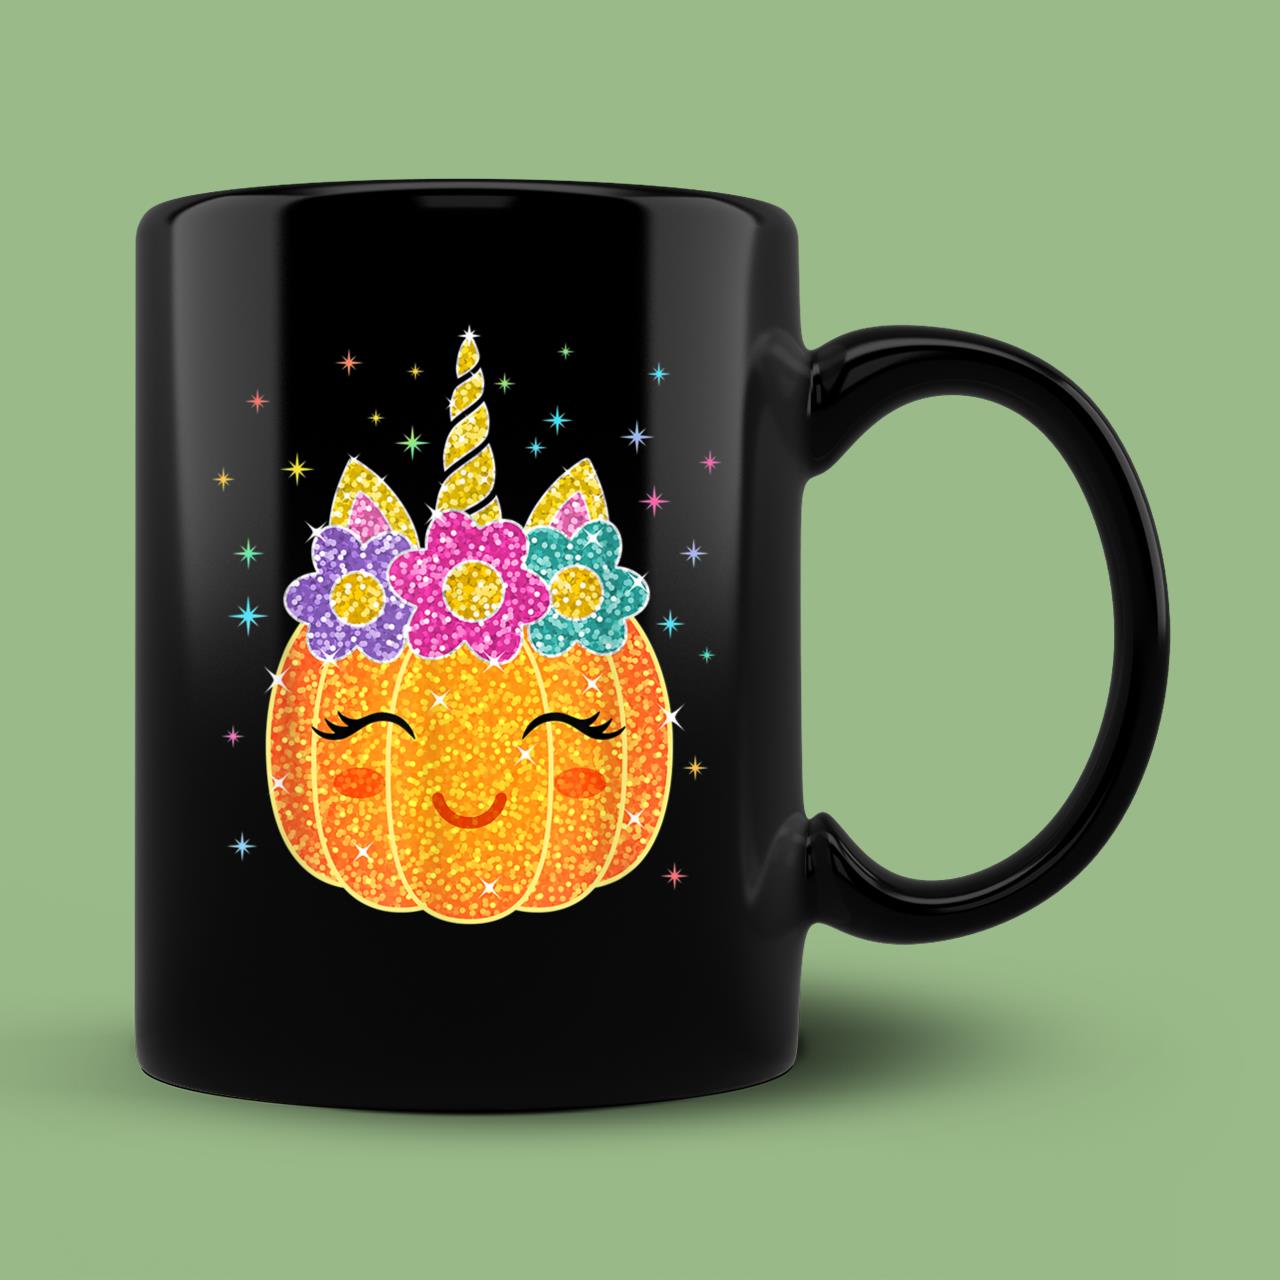 Skitongift Spooky Ceramic Novelty Coffee Mug Cute Unicorn Pumpkin Halloween Thanksgiving Mug